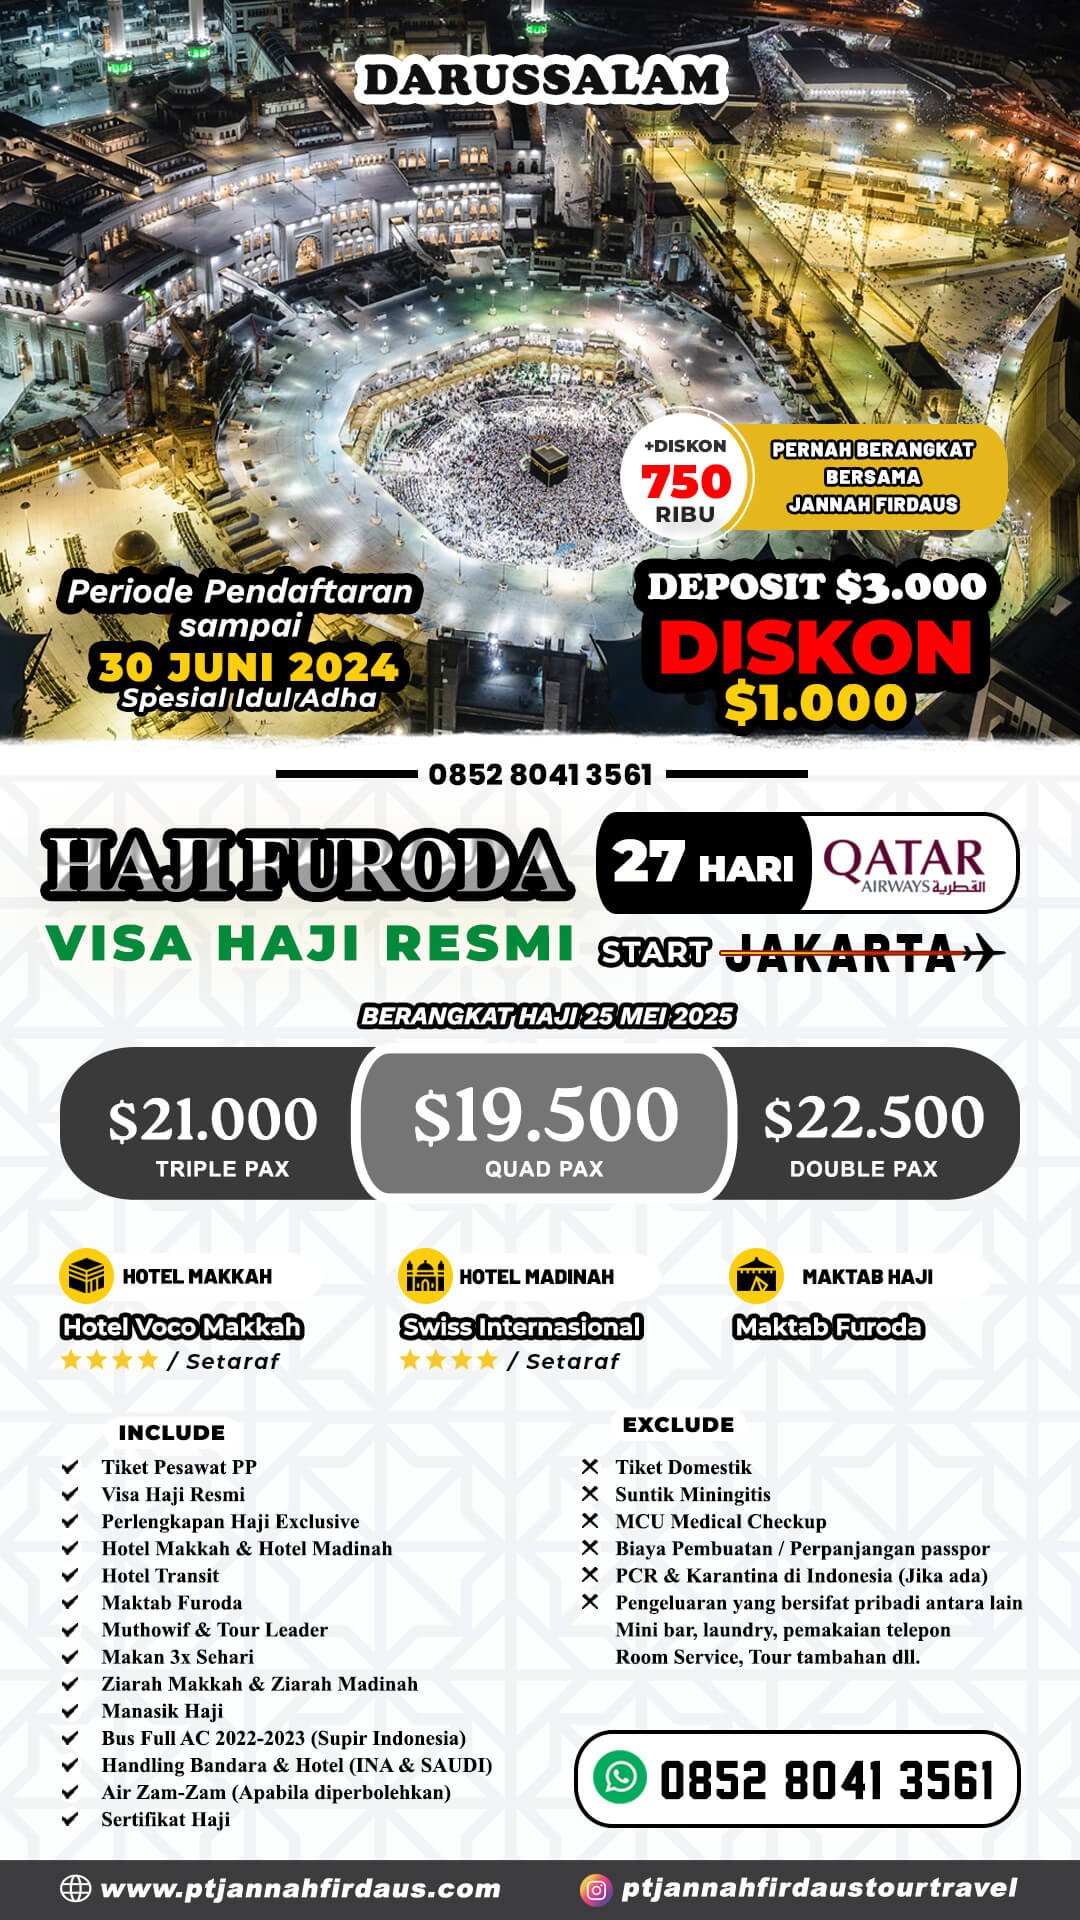 Haji Furoda 2025 Jannah Firdaus Visa Haji Furoda Resmi Darussalam 30 Juni 2024